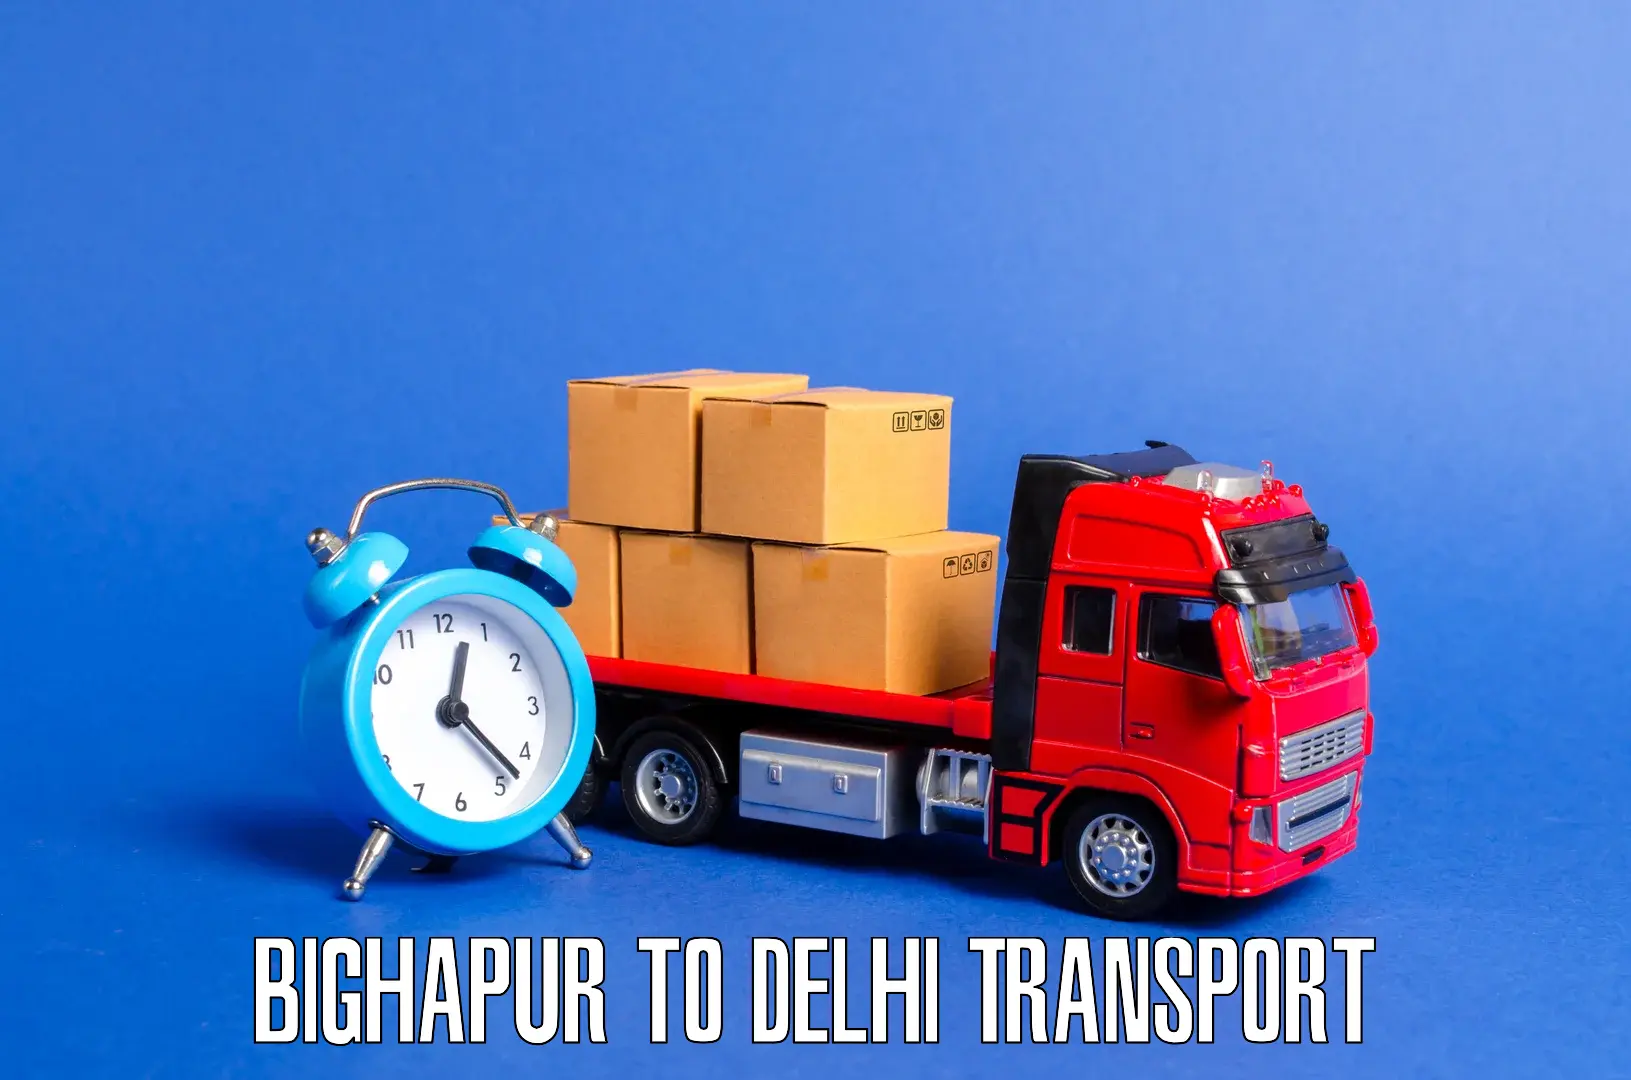 Pick up transport service Bighapur to Kalkaji